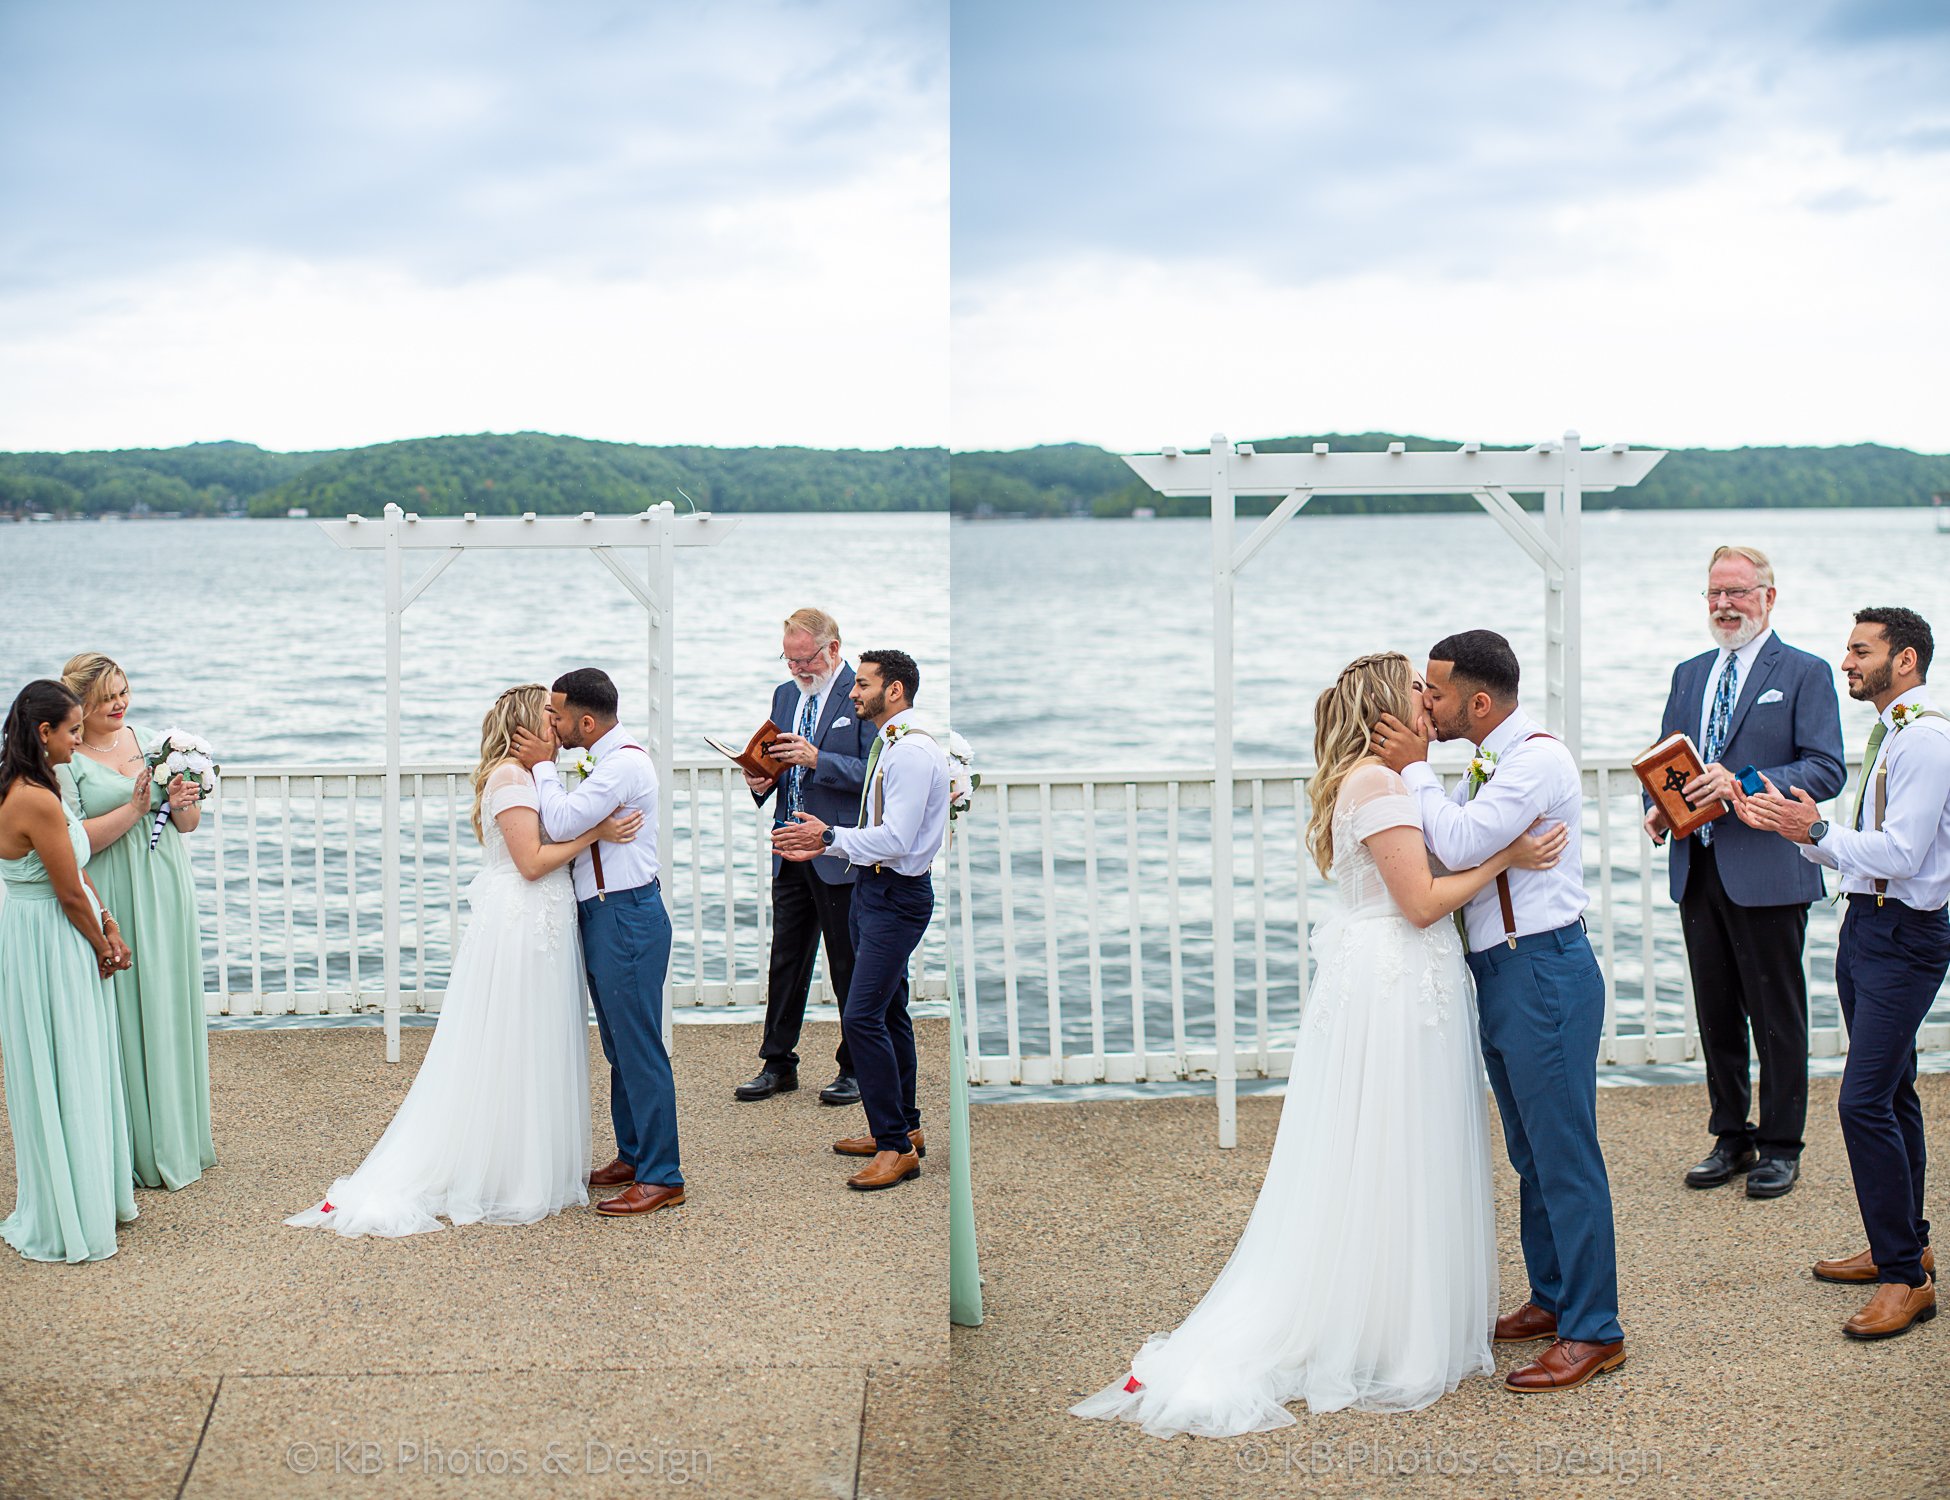 Abbi-Daniel-Wedding-Lake-of-the-Ozarks-Margaritaville-Missouri-Jefferson-City-wedding-photos-KB-Photos-and-Design-569-1.jpg